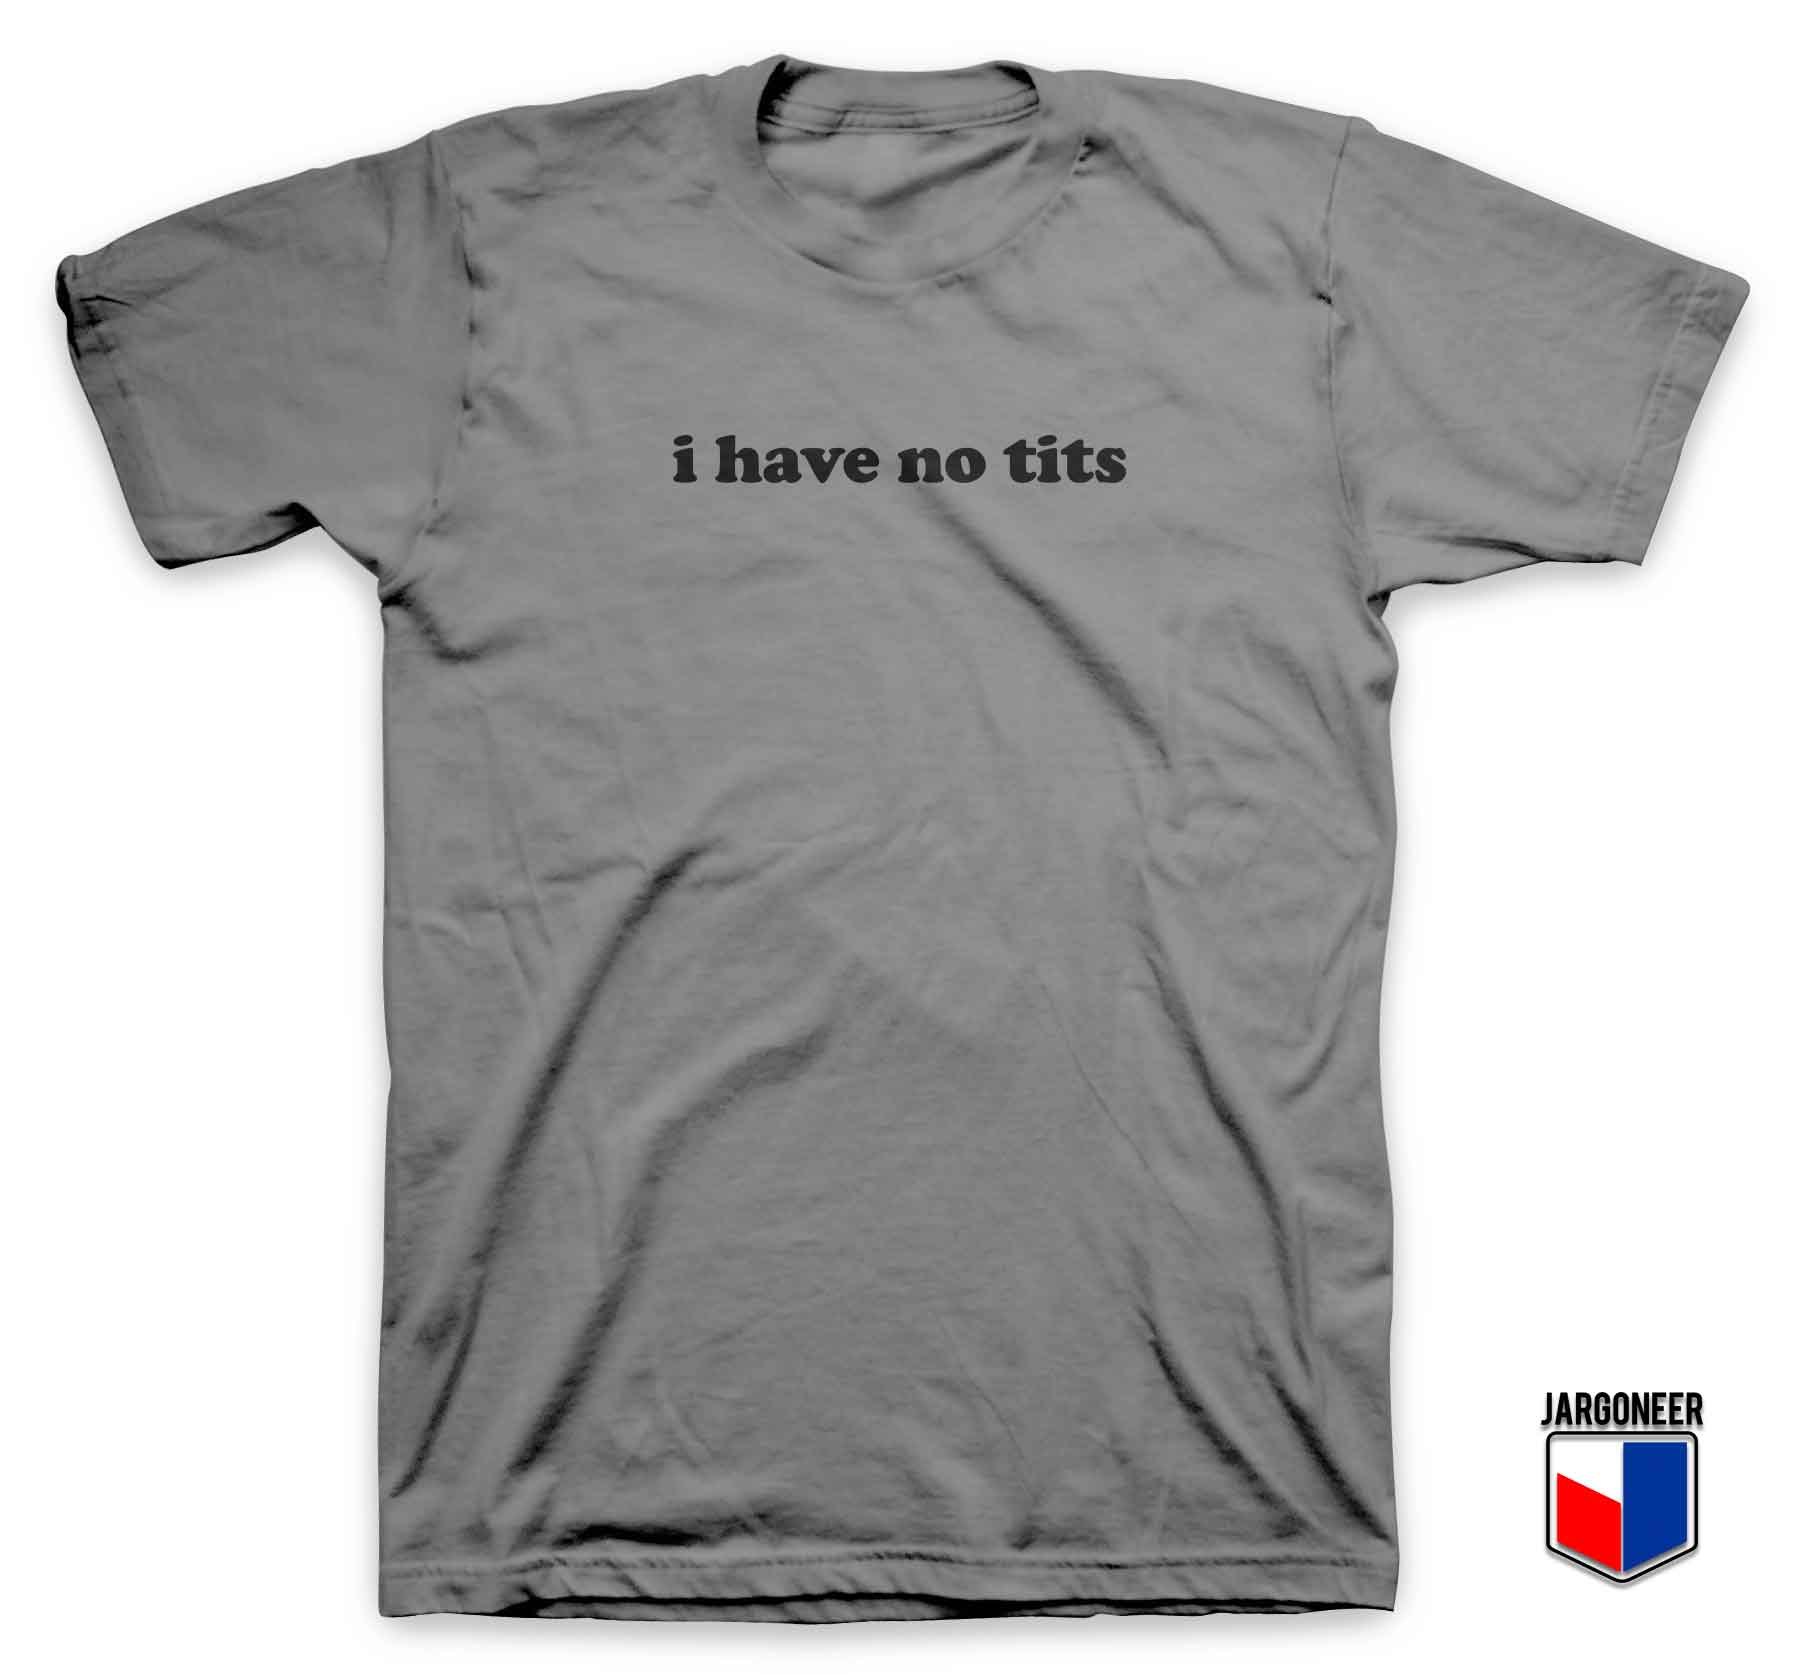 I Have No Tits 3 - Shop Unique Graphic Cool Shirt Designs